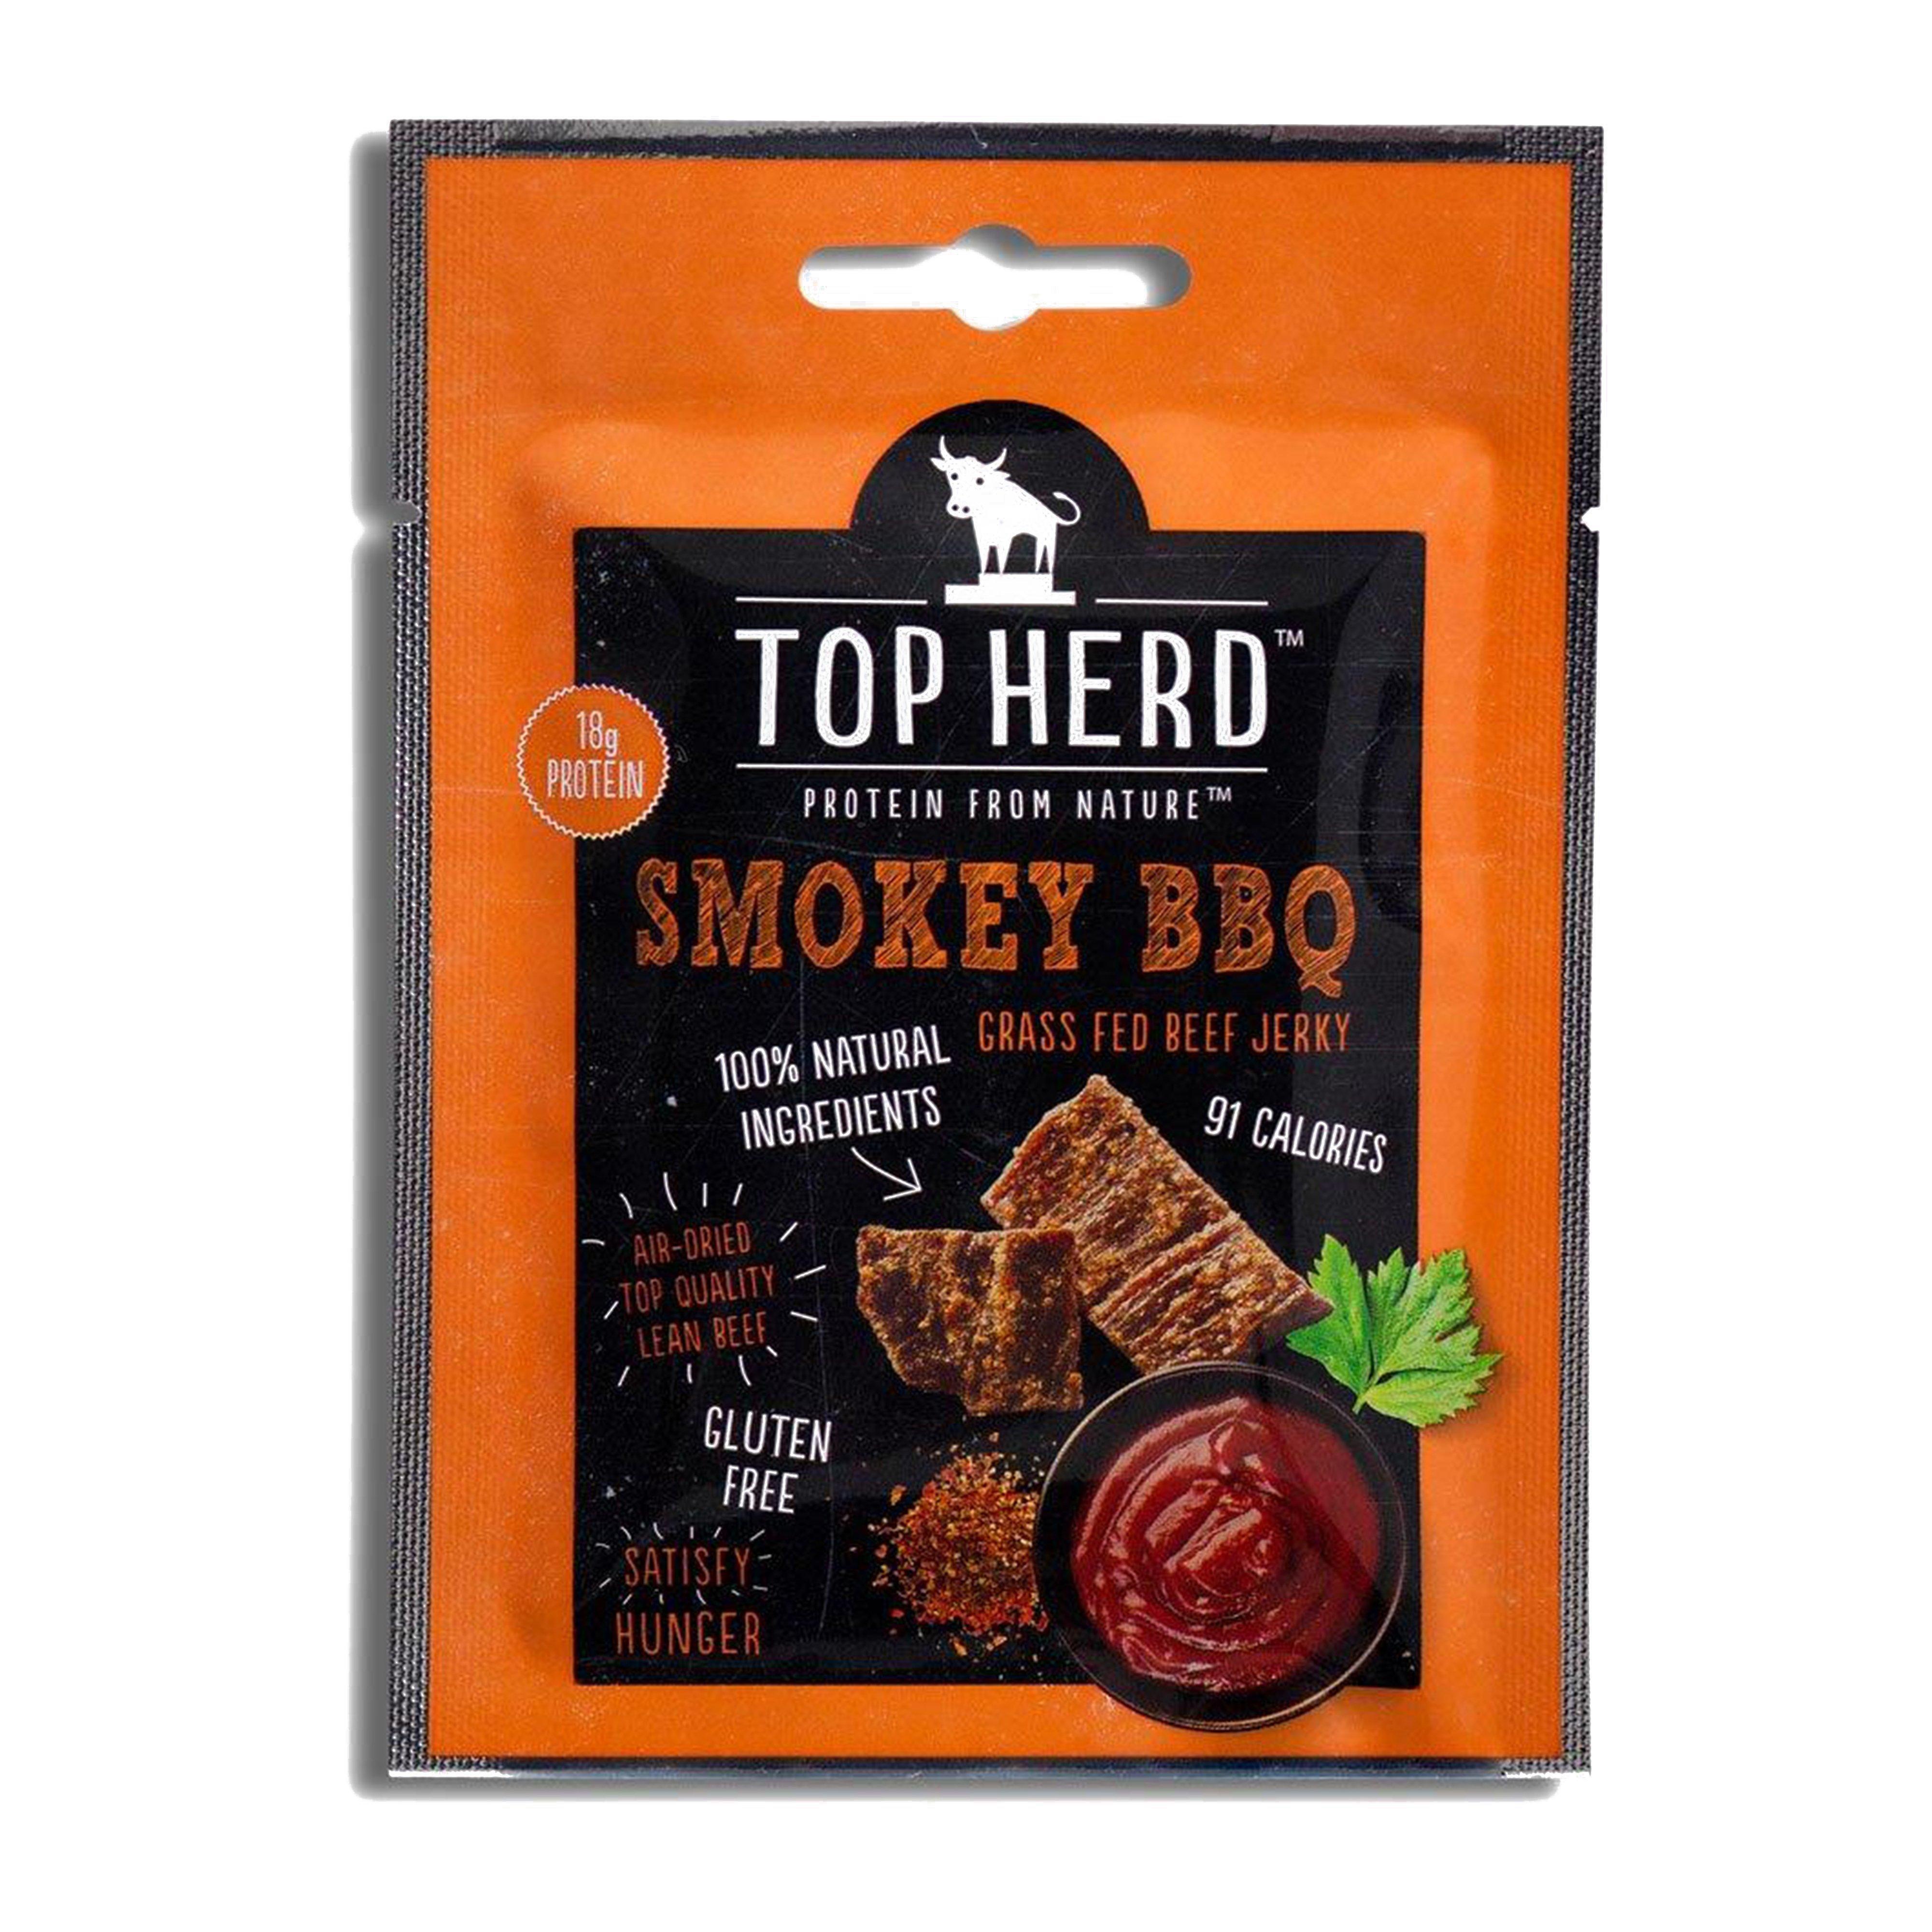 Top Herd Jerky Smokey BBQ Review